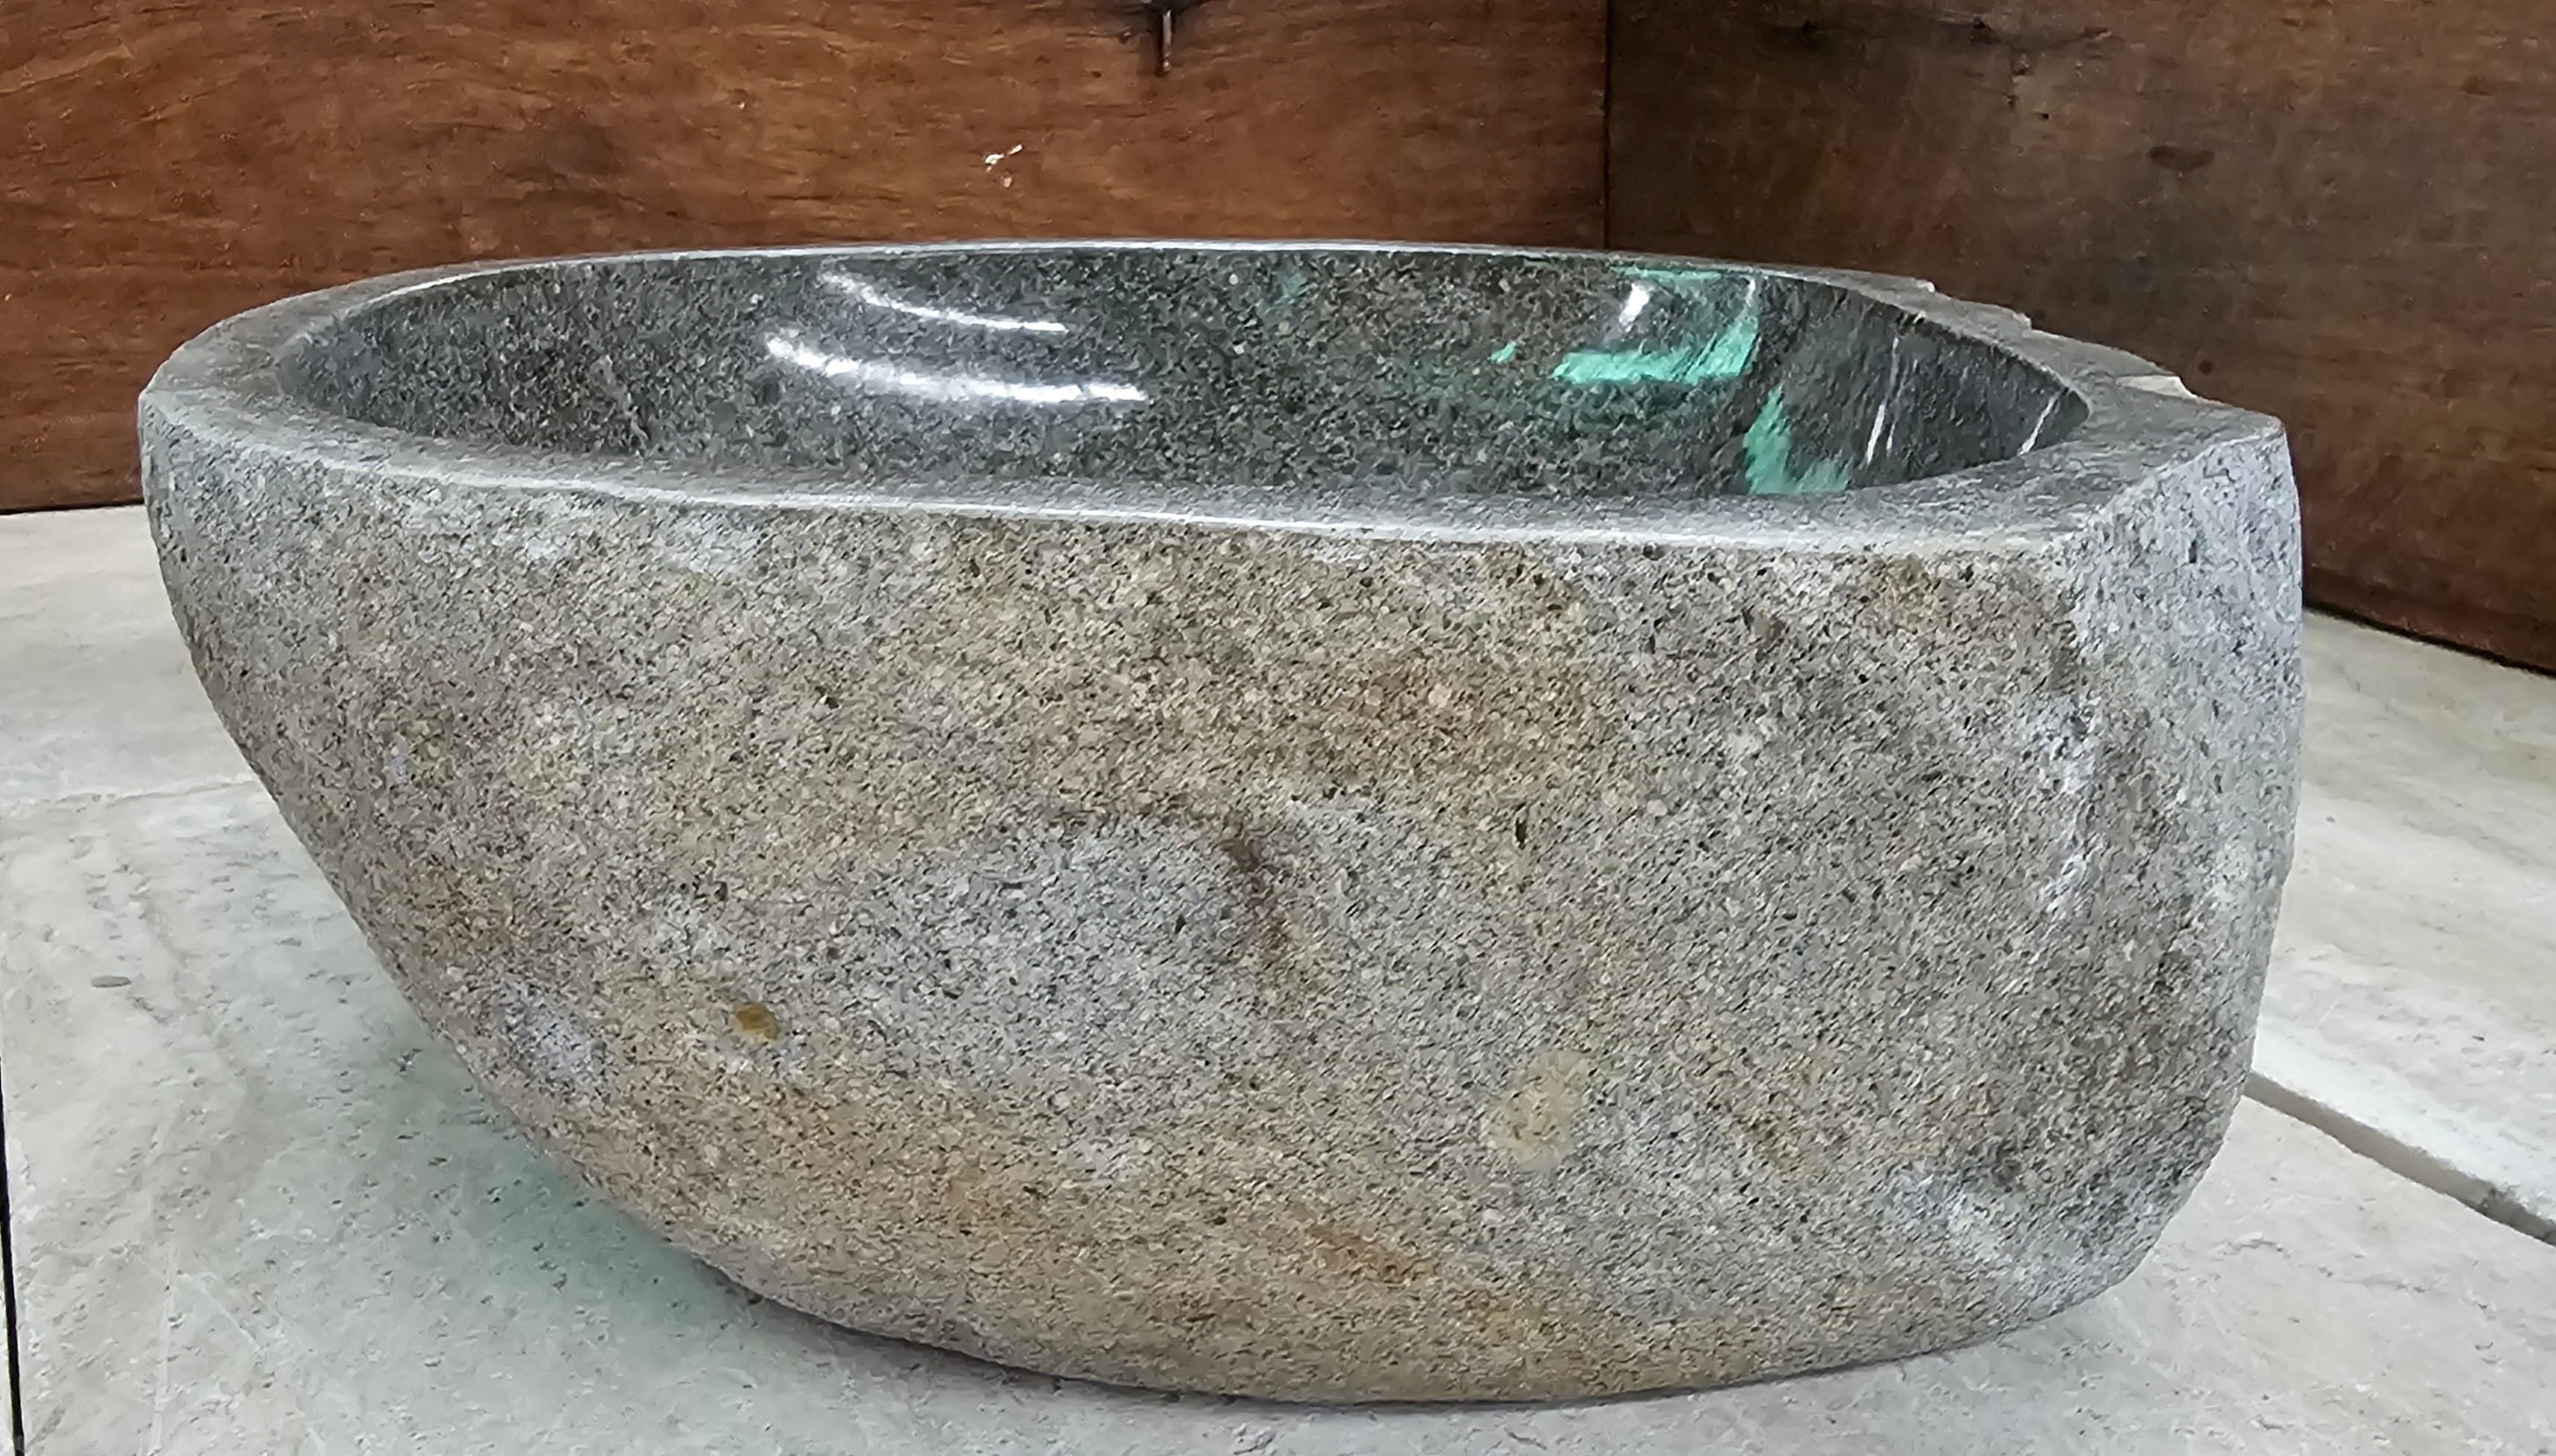 Handmade Natural Oval River Stone  Bathroom Basin  RM 2310022